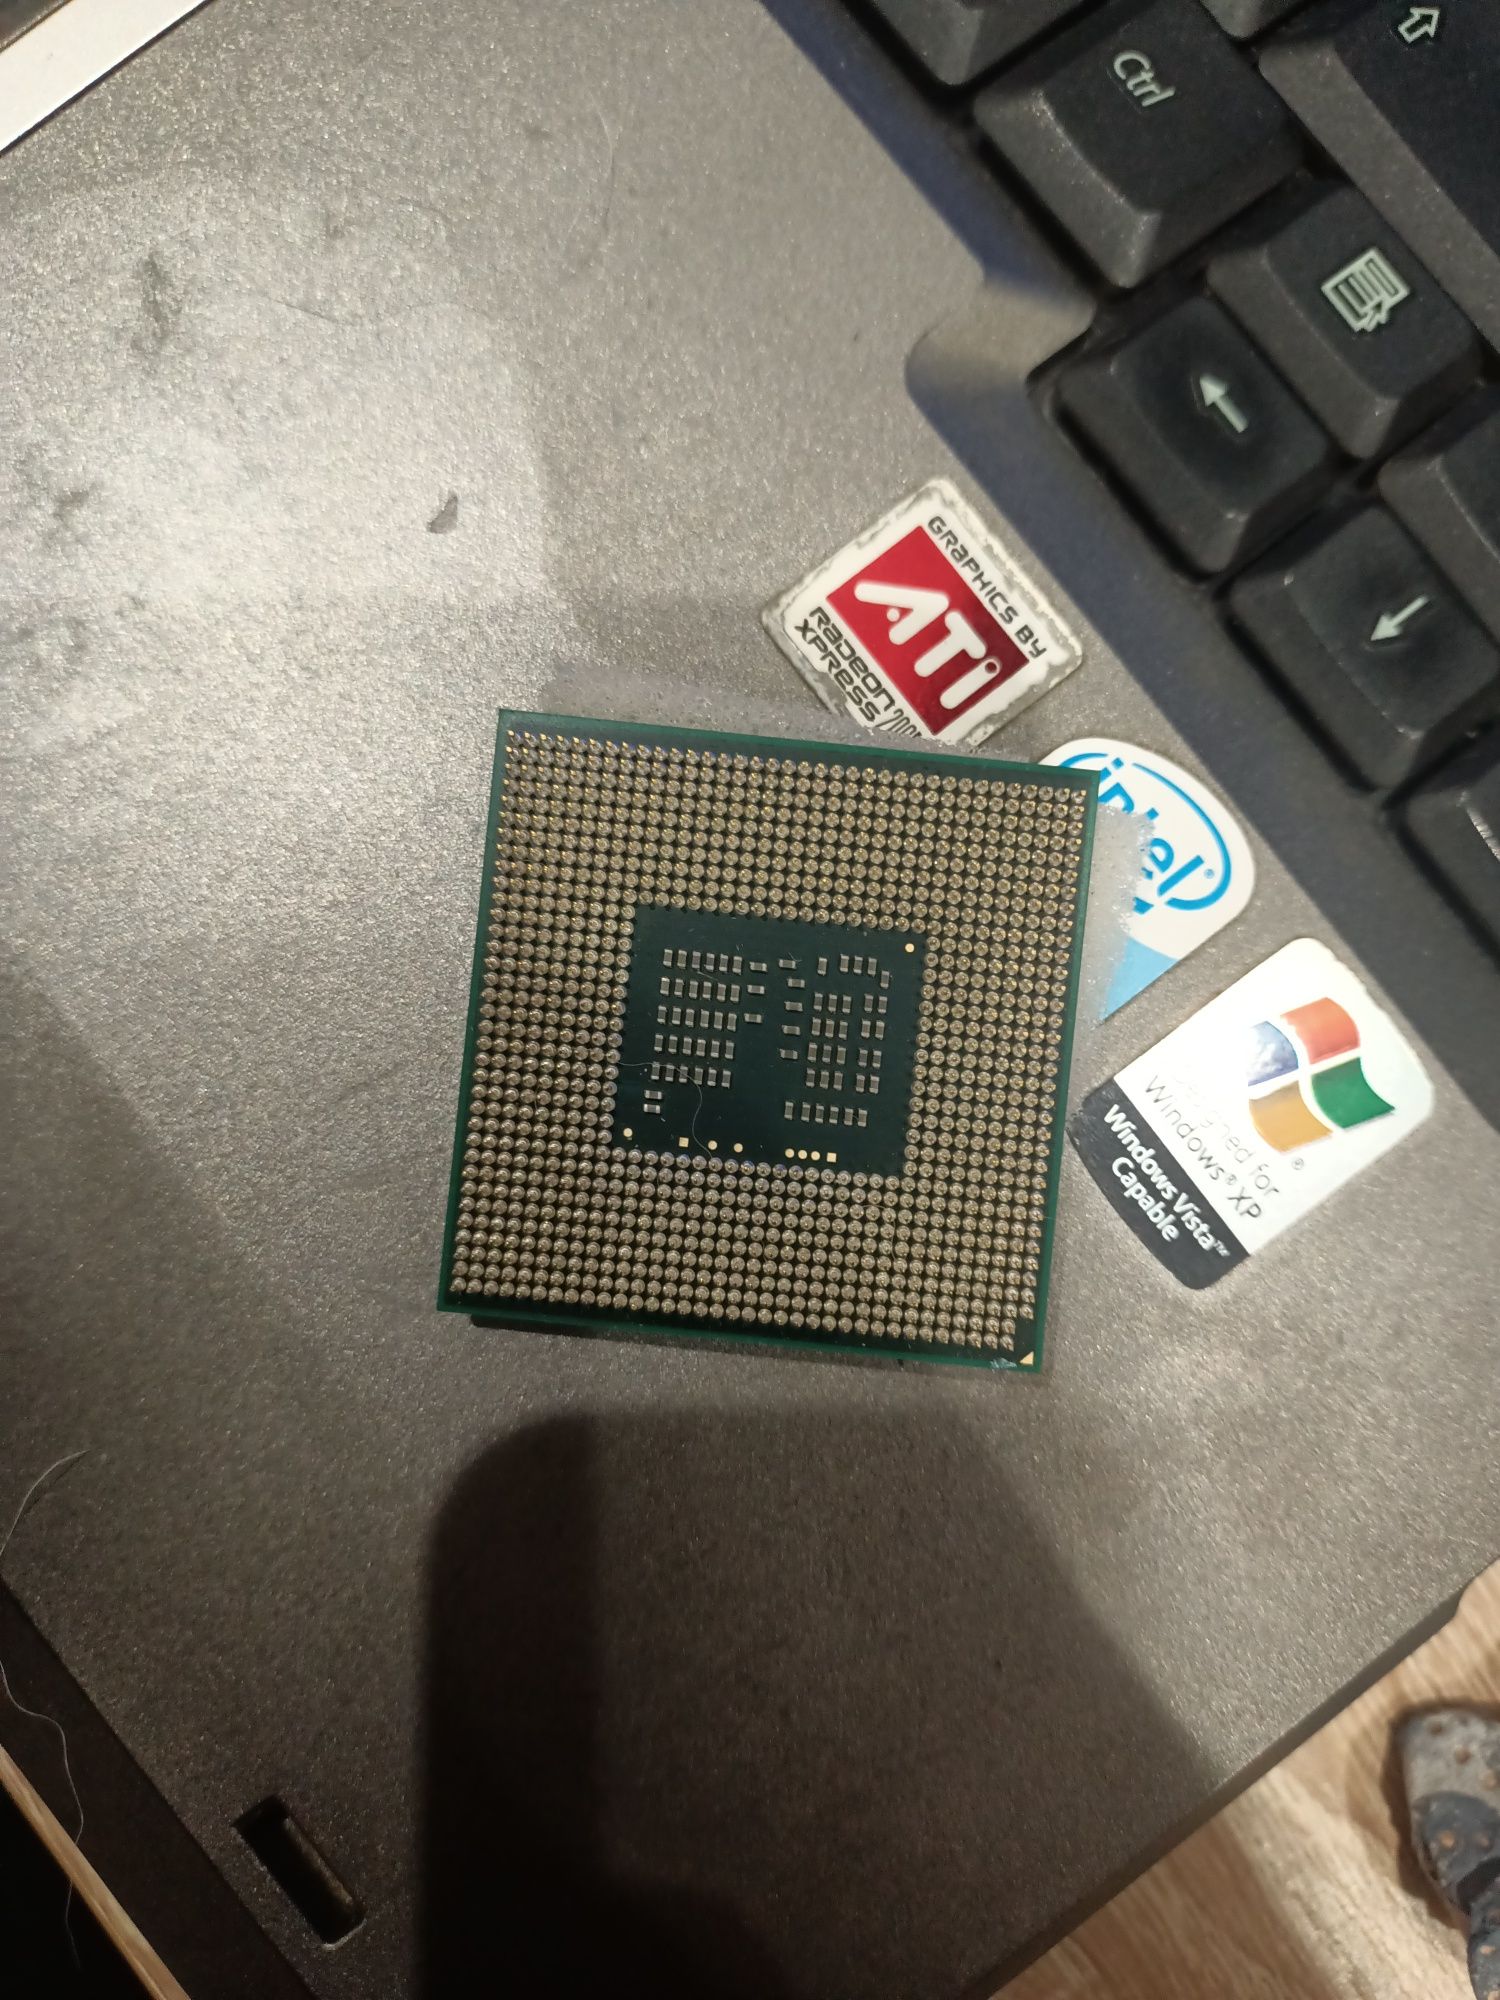 Intel core i3-378m